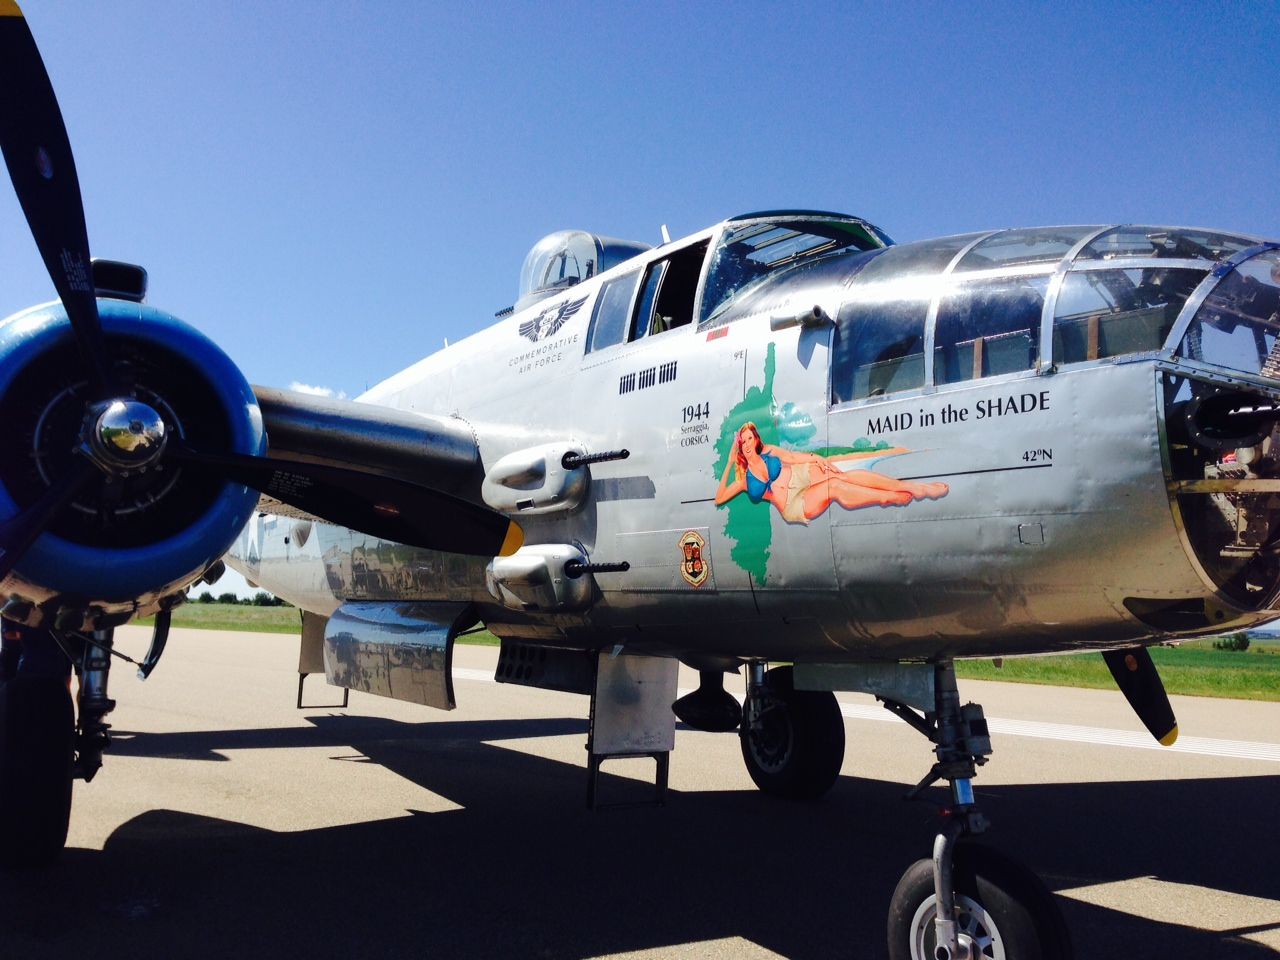 Vintage war plane on display in Airdrie - Calgary